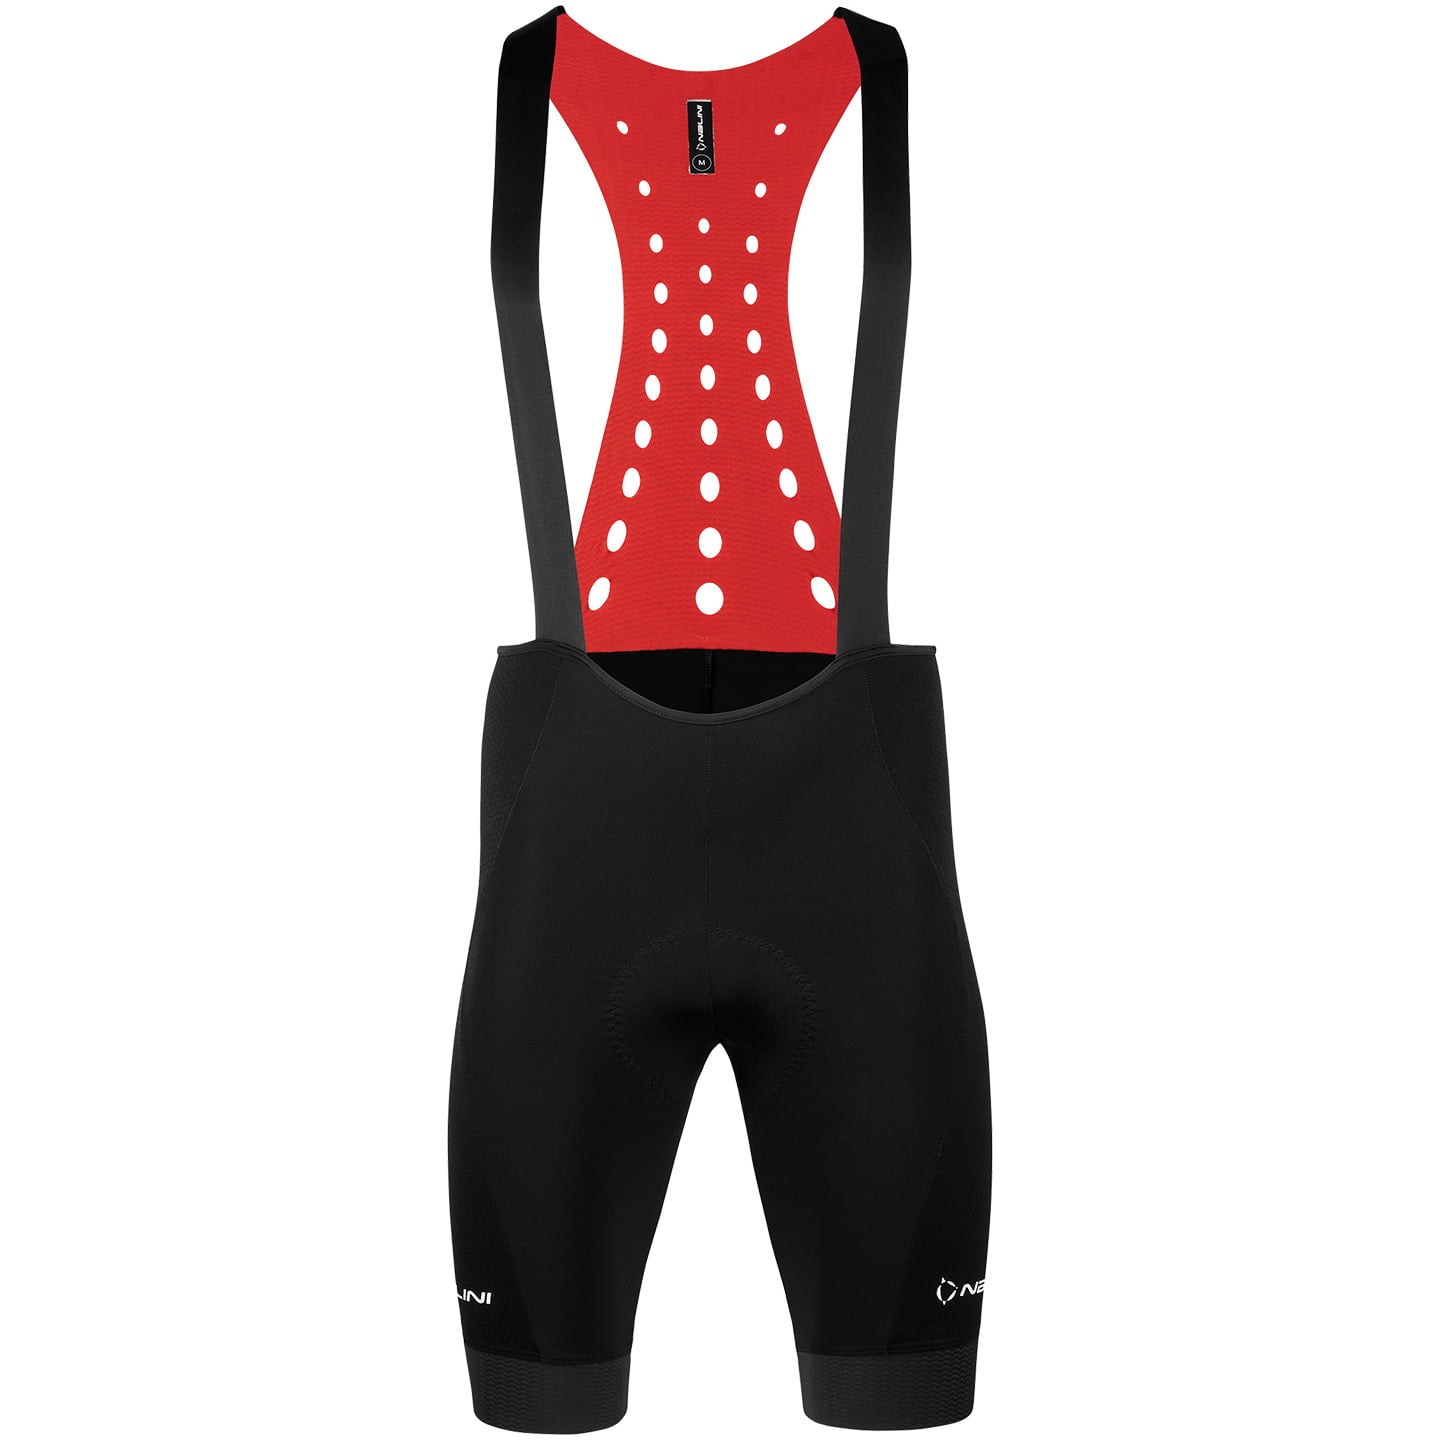 NALINI New Ergo Bib Shorts Bib Shorts, for men, size 2XL, Cycle shorts, Cycling clothing